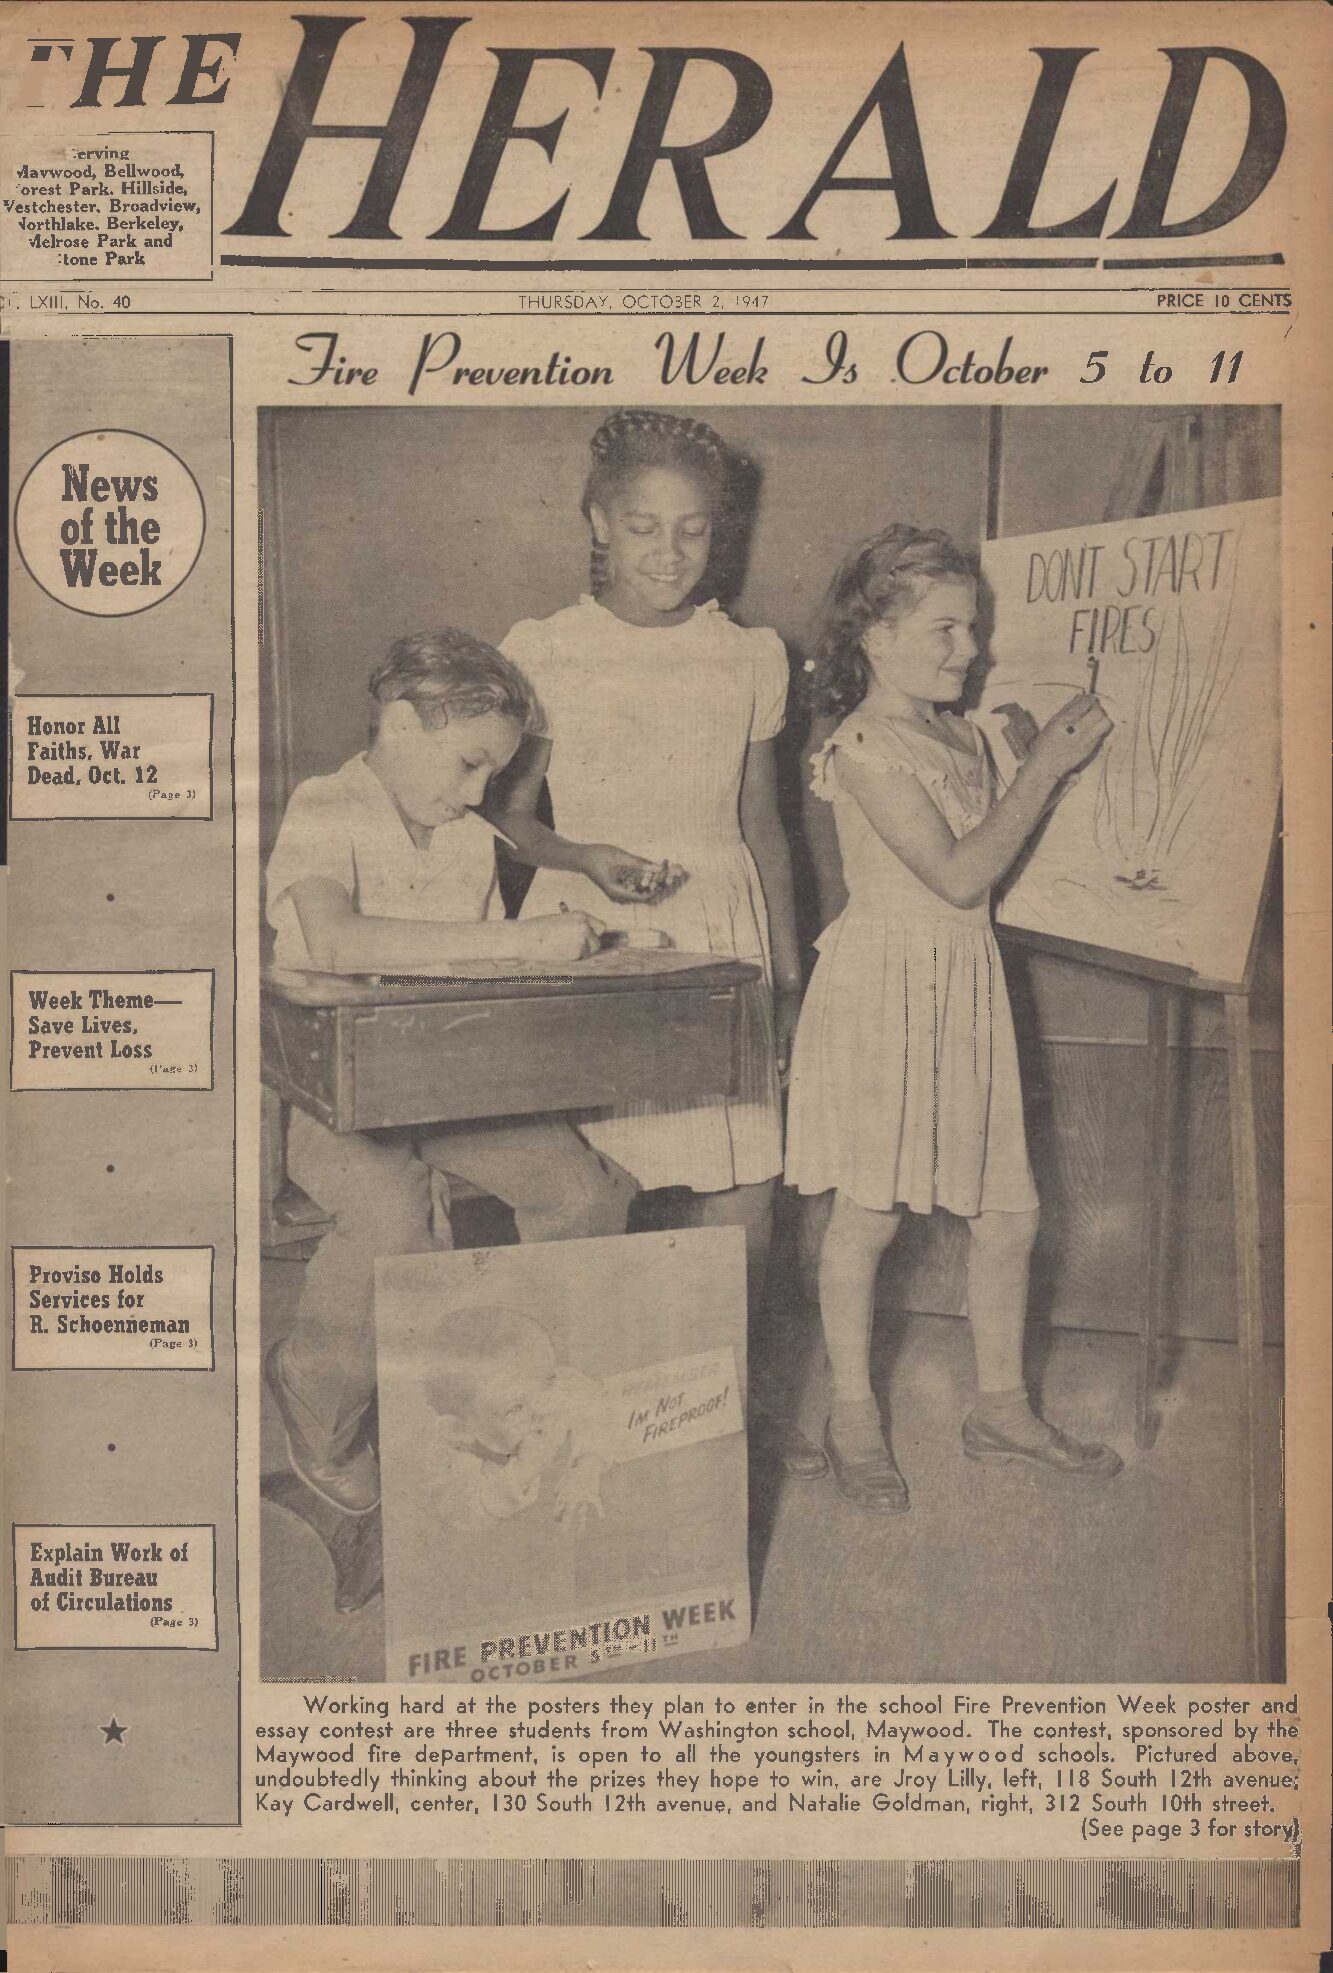 The Herald – 19471002